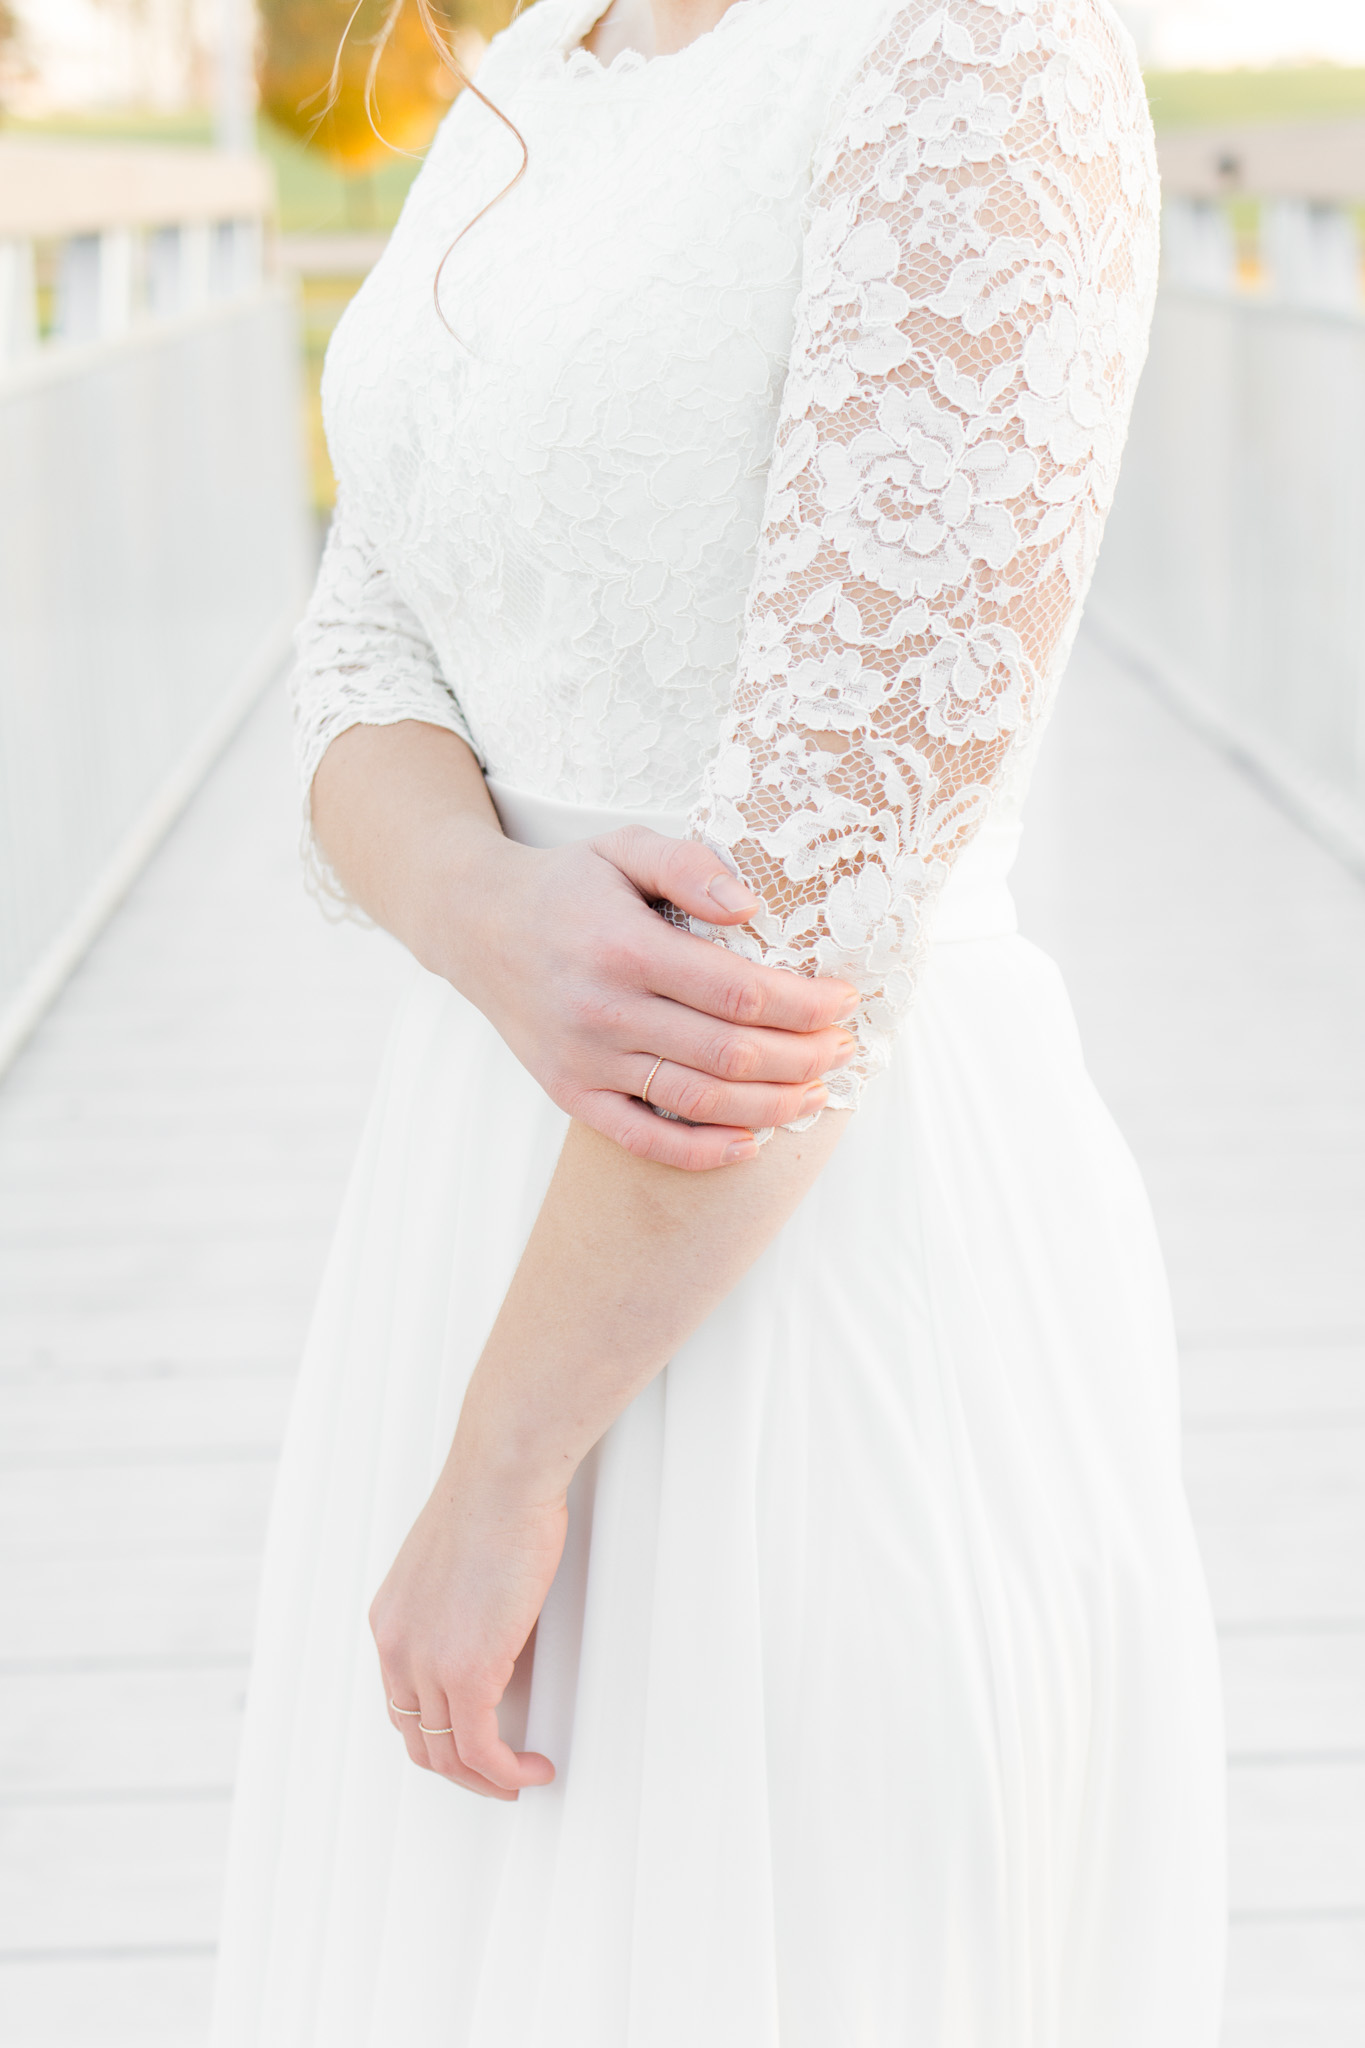 Modest lace wedding dress - Karen Elise Photography